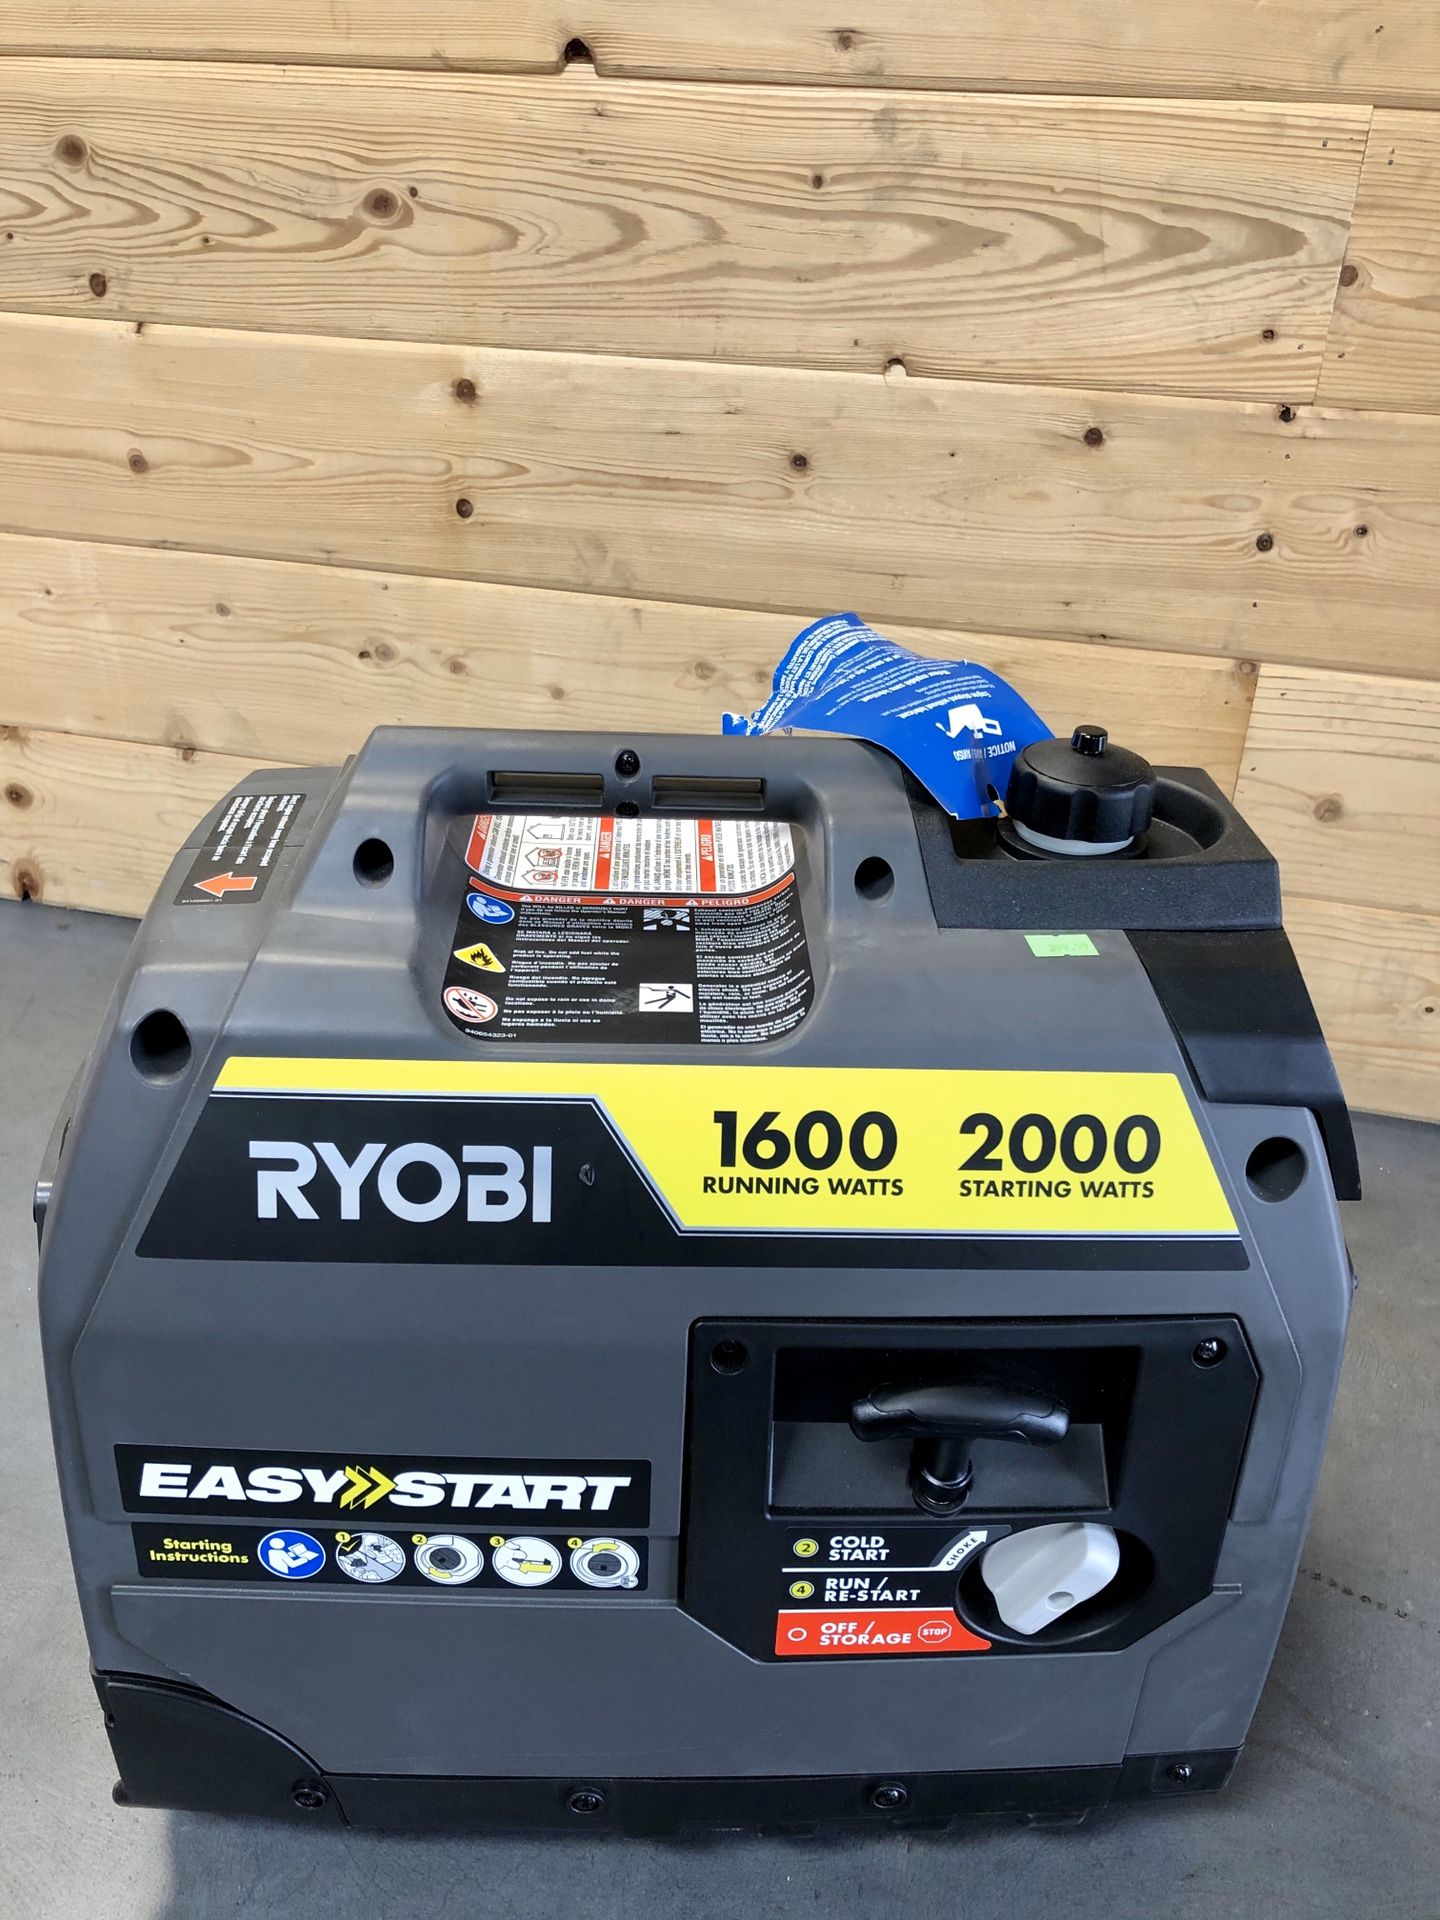 RYOBI Digital Inverter Generator